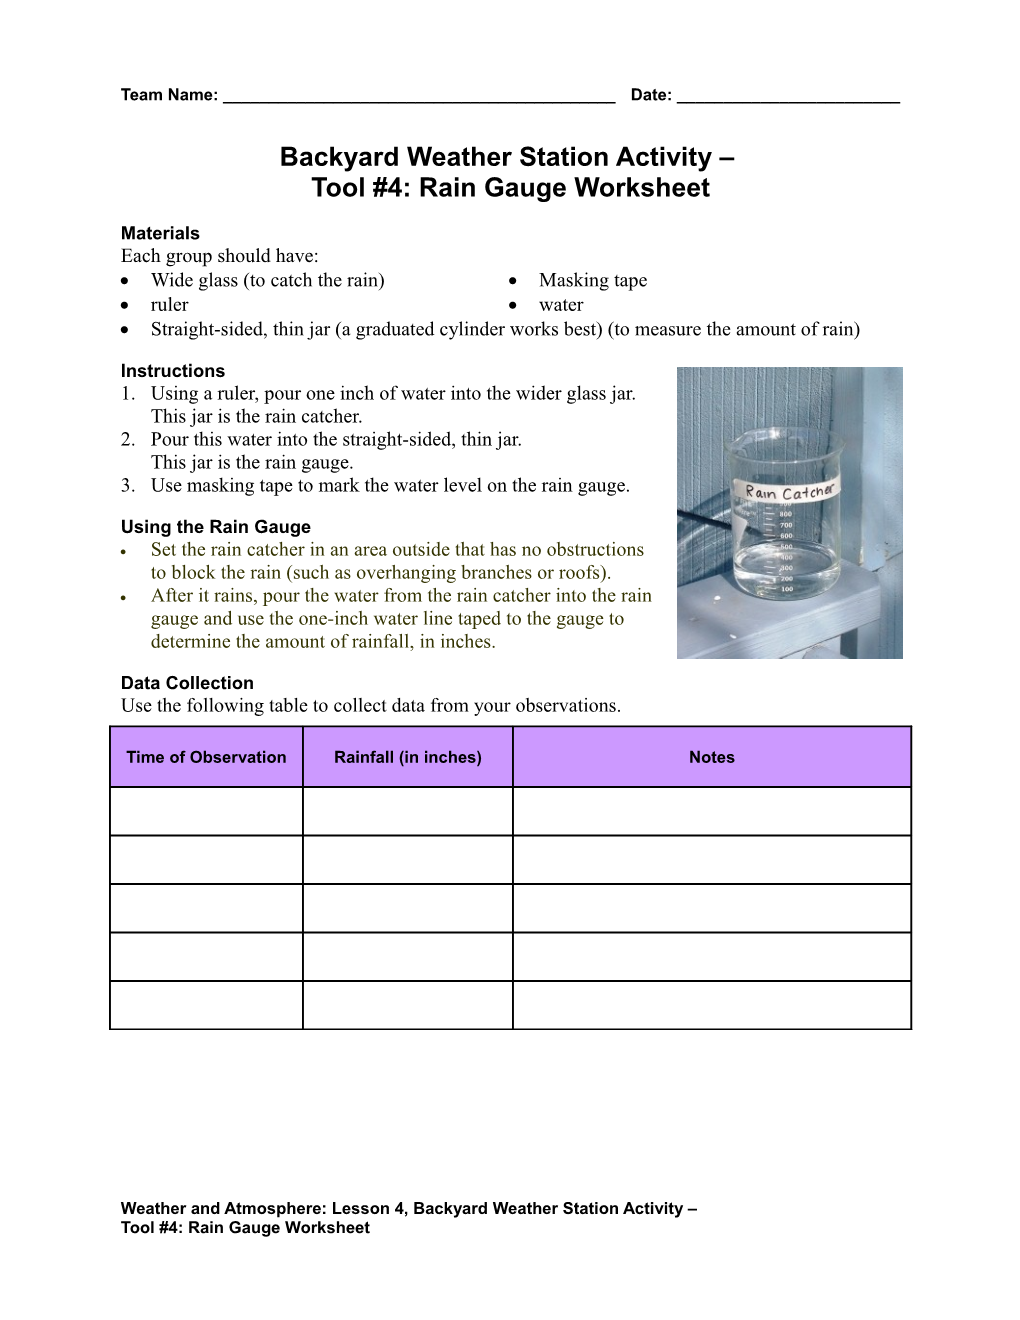 Backyard Weather Station Activity Tool #4: Rain Gauge Worksheet